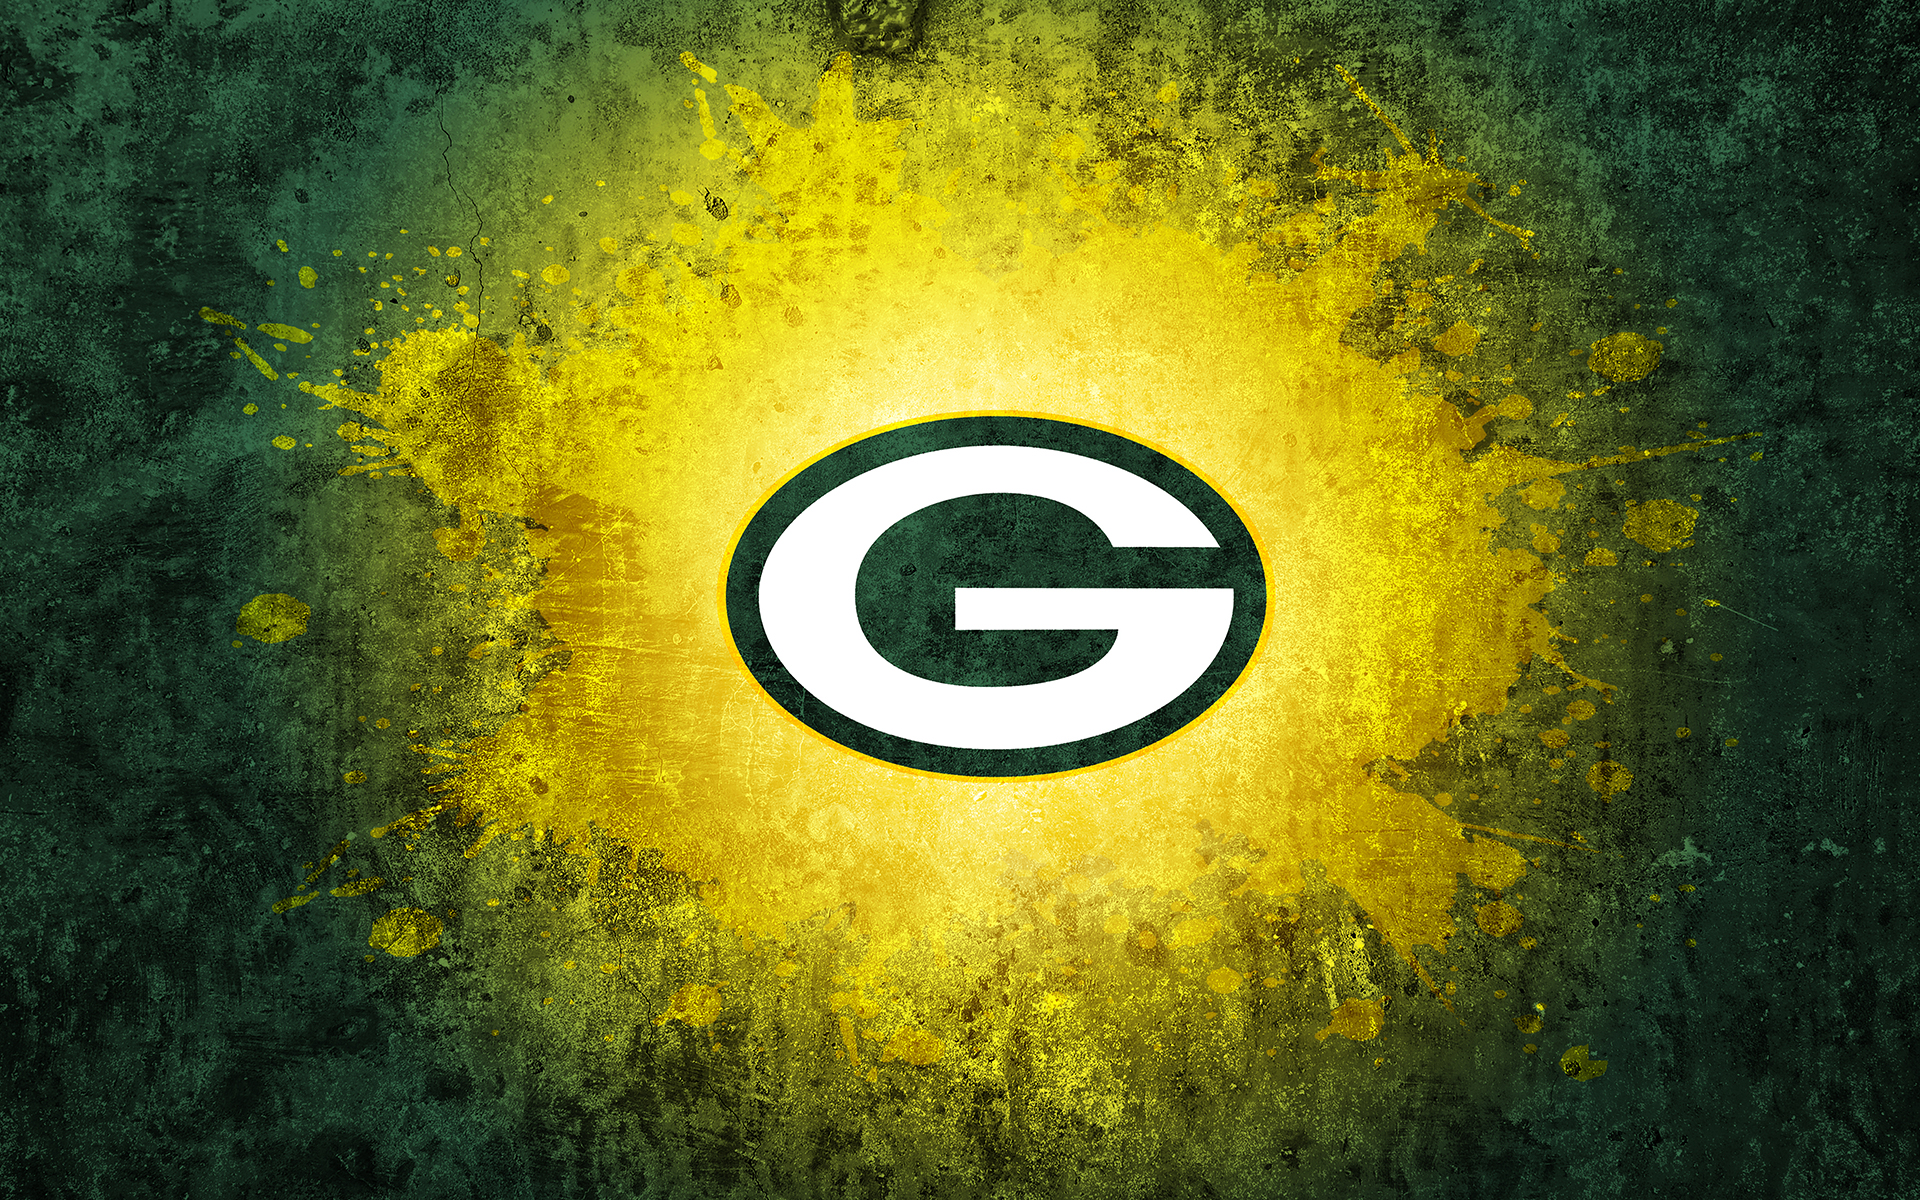 Packers Desktop Wallpapers  Green Bay Packers  packerscom